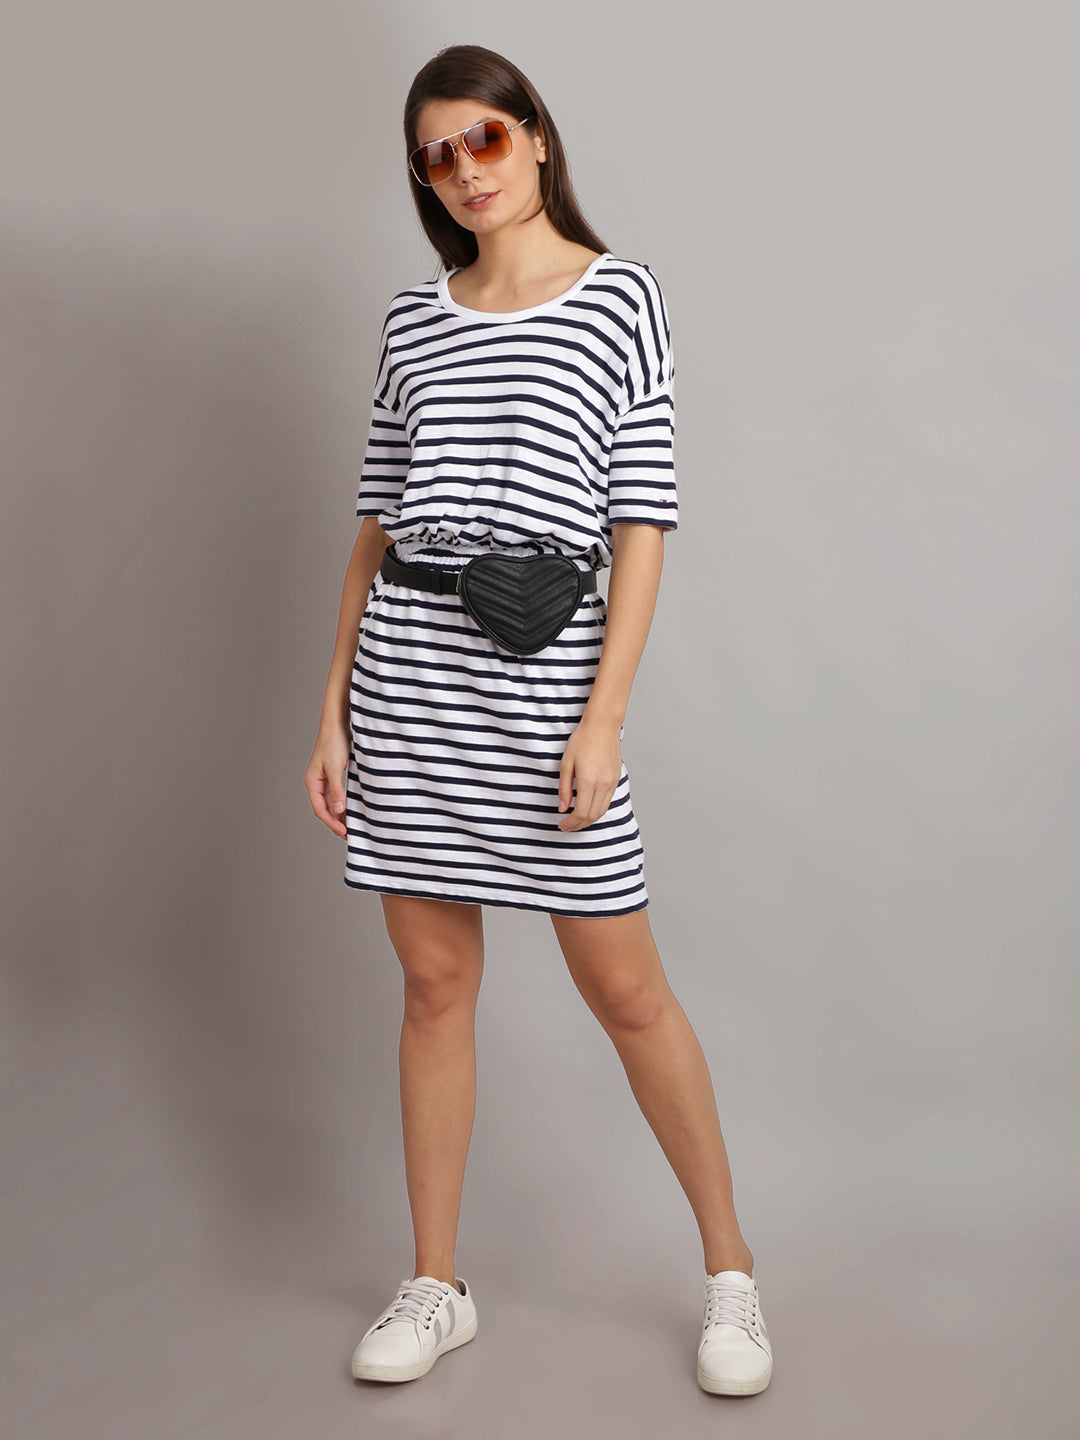 Buy Womens Black And White Striped T Shirt Dress Online India Urgear Urgear